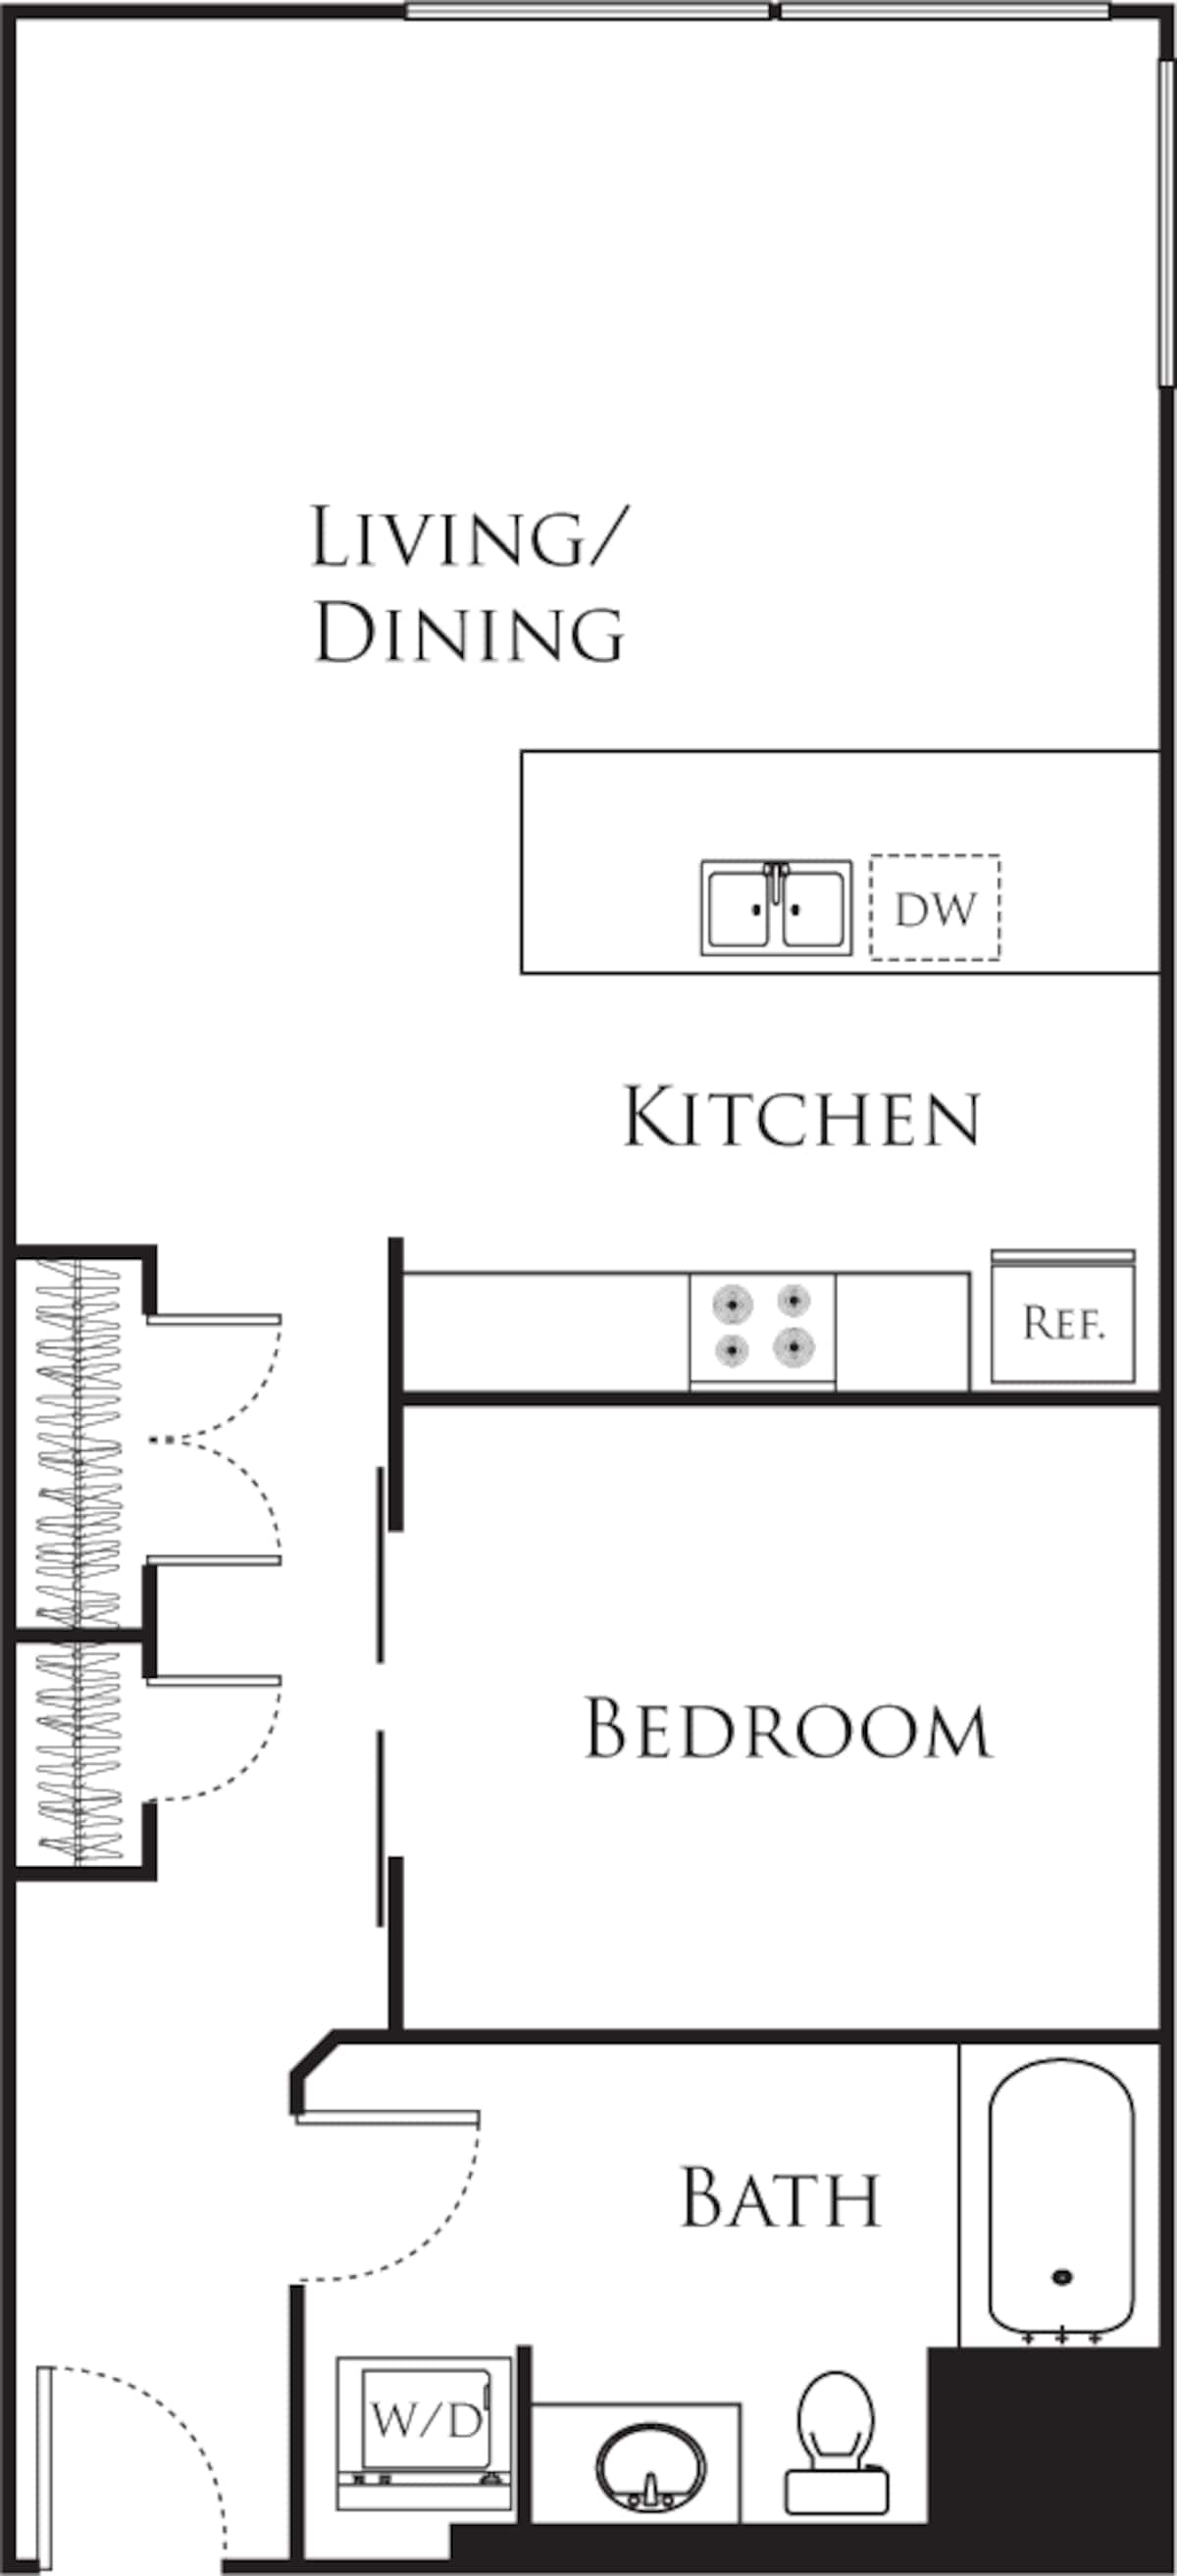 Floorplan diagram for A5, showing Studio